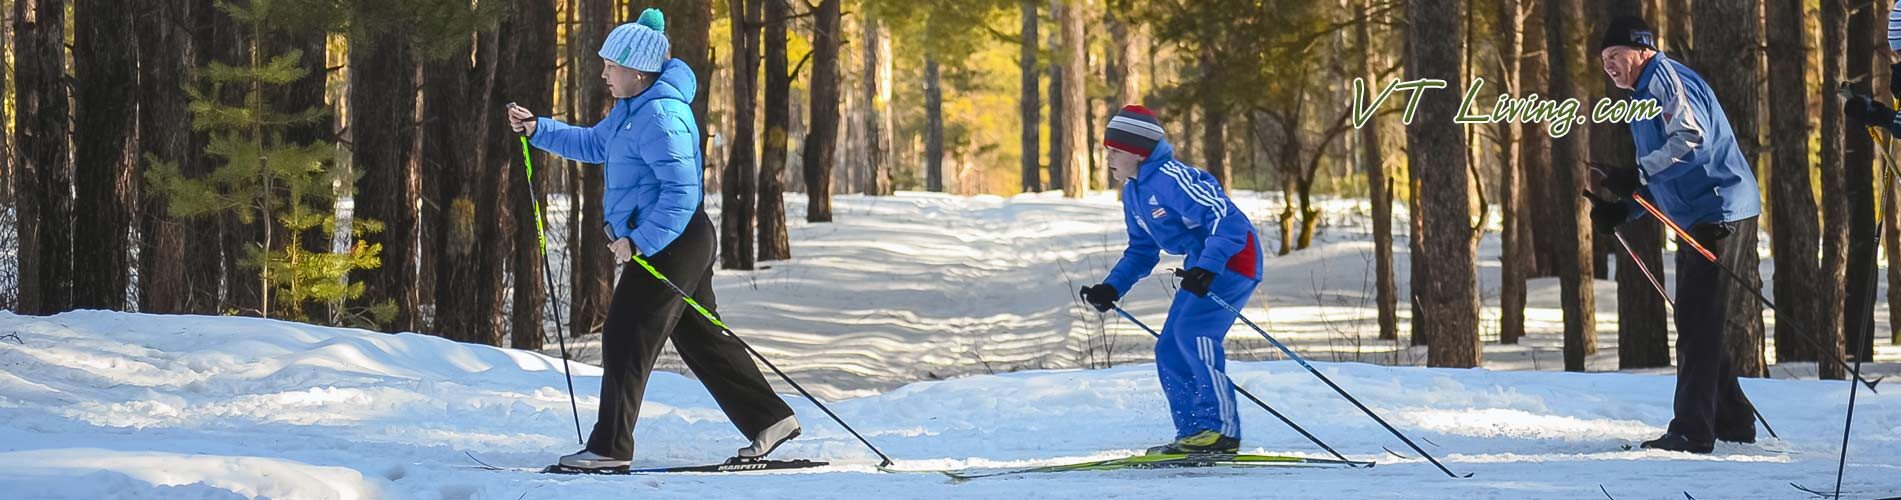 Vermont Winter Resorts Skiers Snowboarding Snow Sports